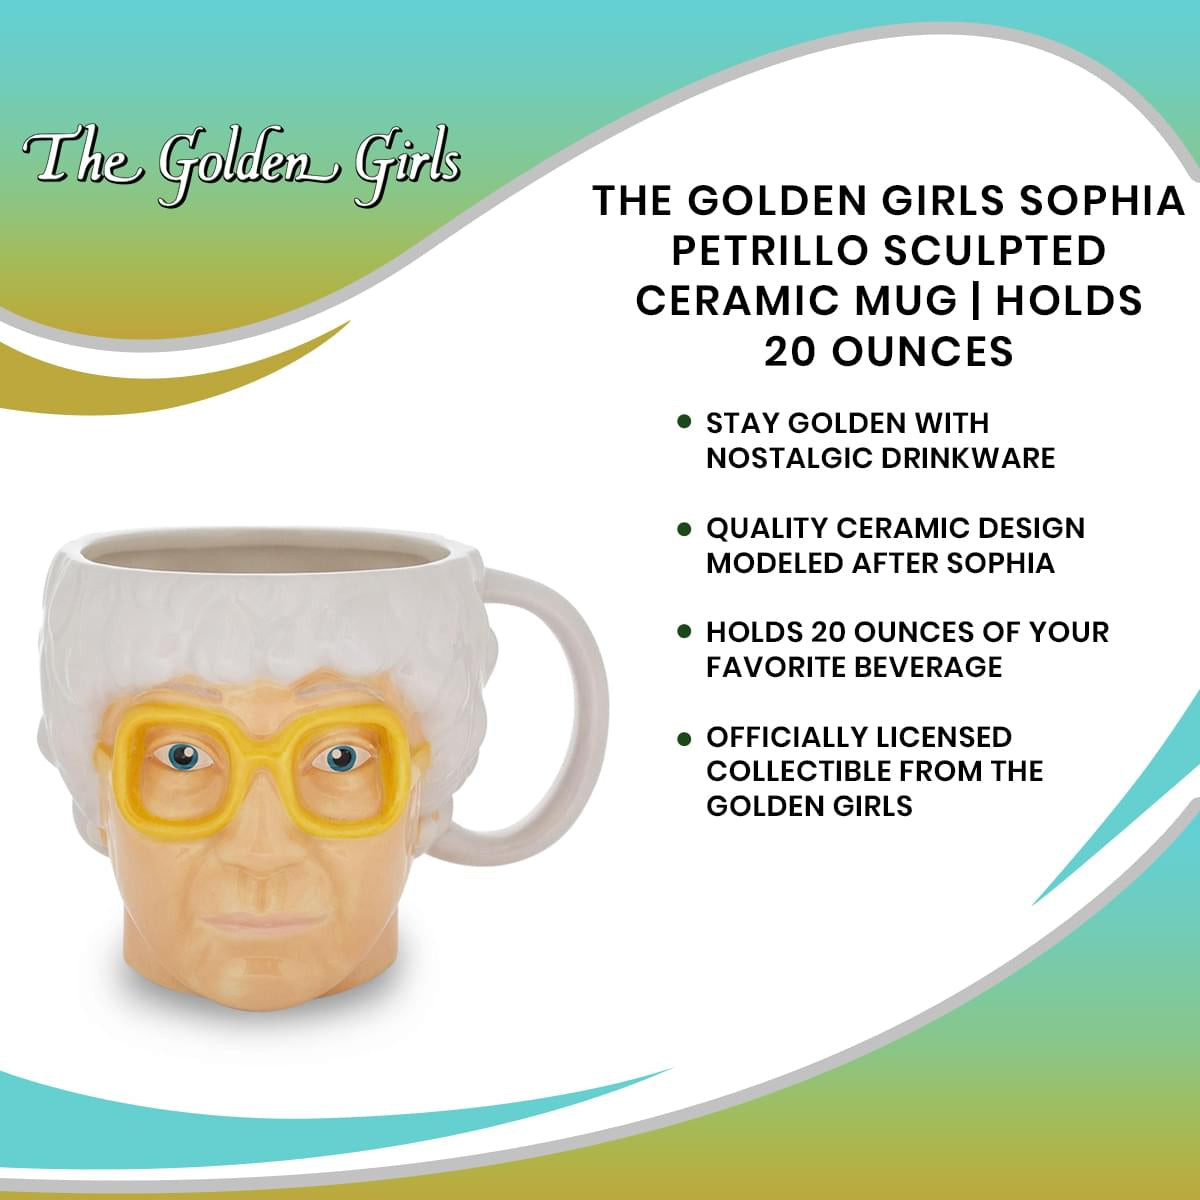 The Golden Girls Sophia Petrillo Sculpted Ceramic Mug | Holds 20 Ounces